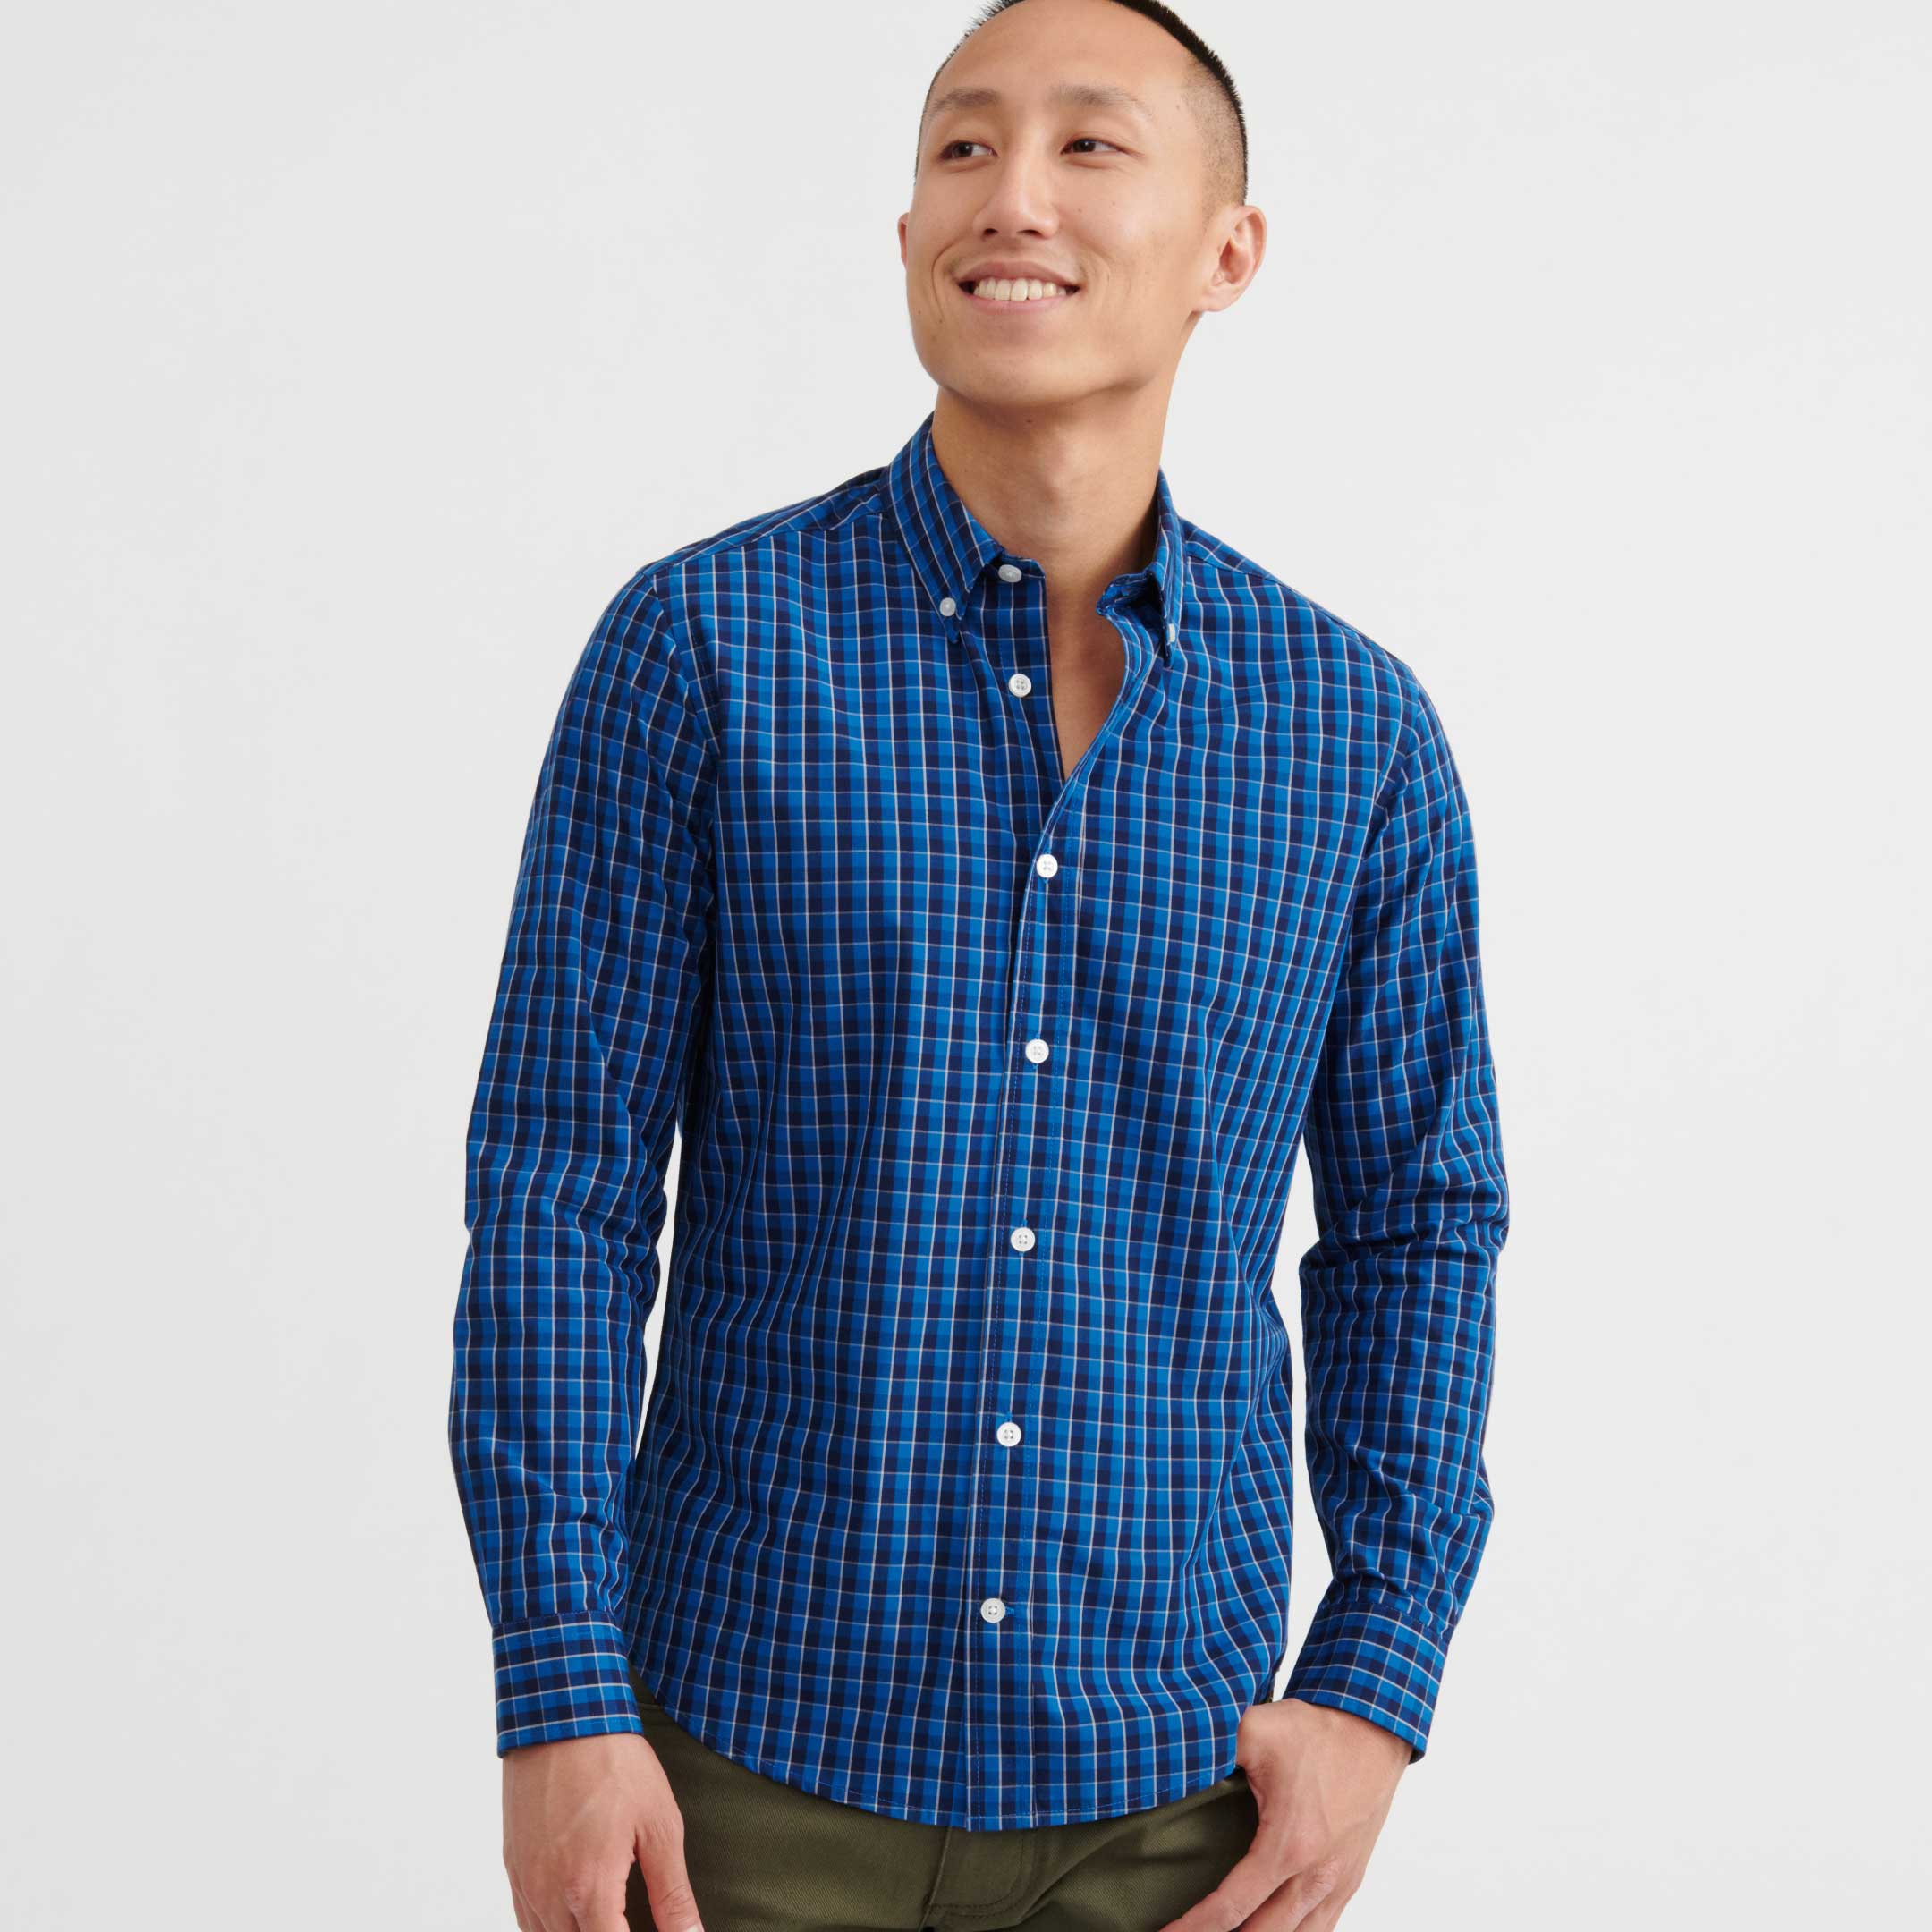 Ash & Erie Sawyer Plaid Button-Down Shirt for Short Men   Everyday Shirts